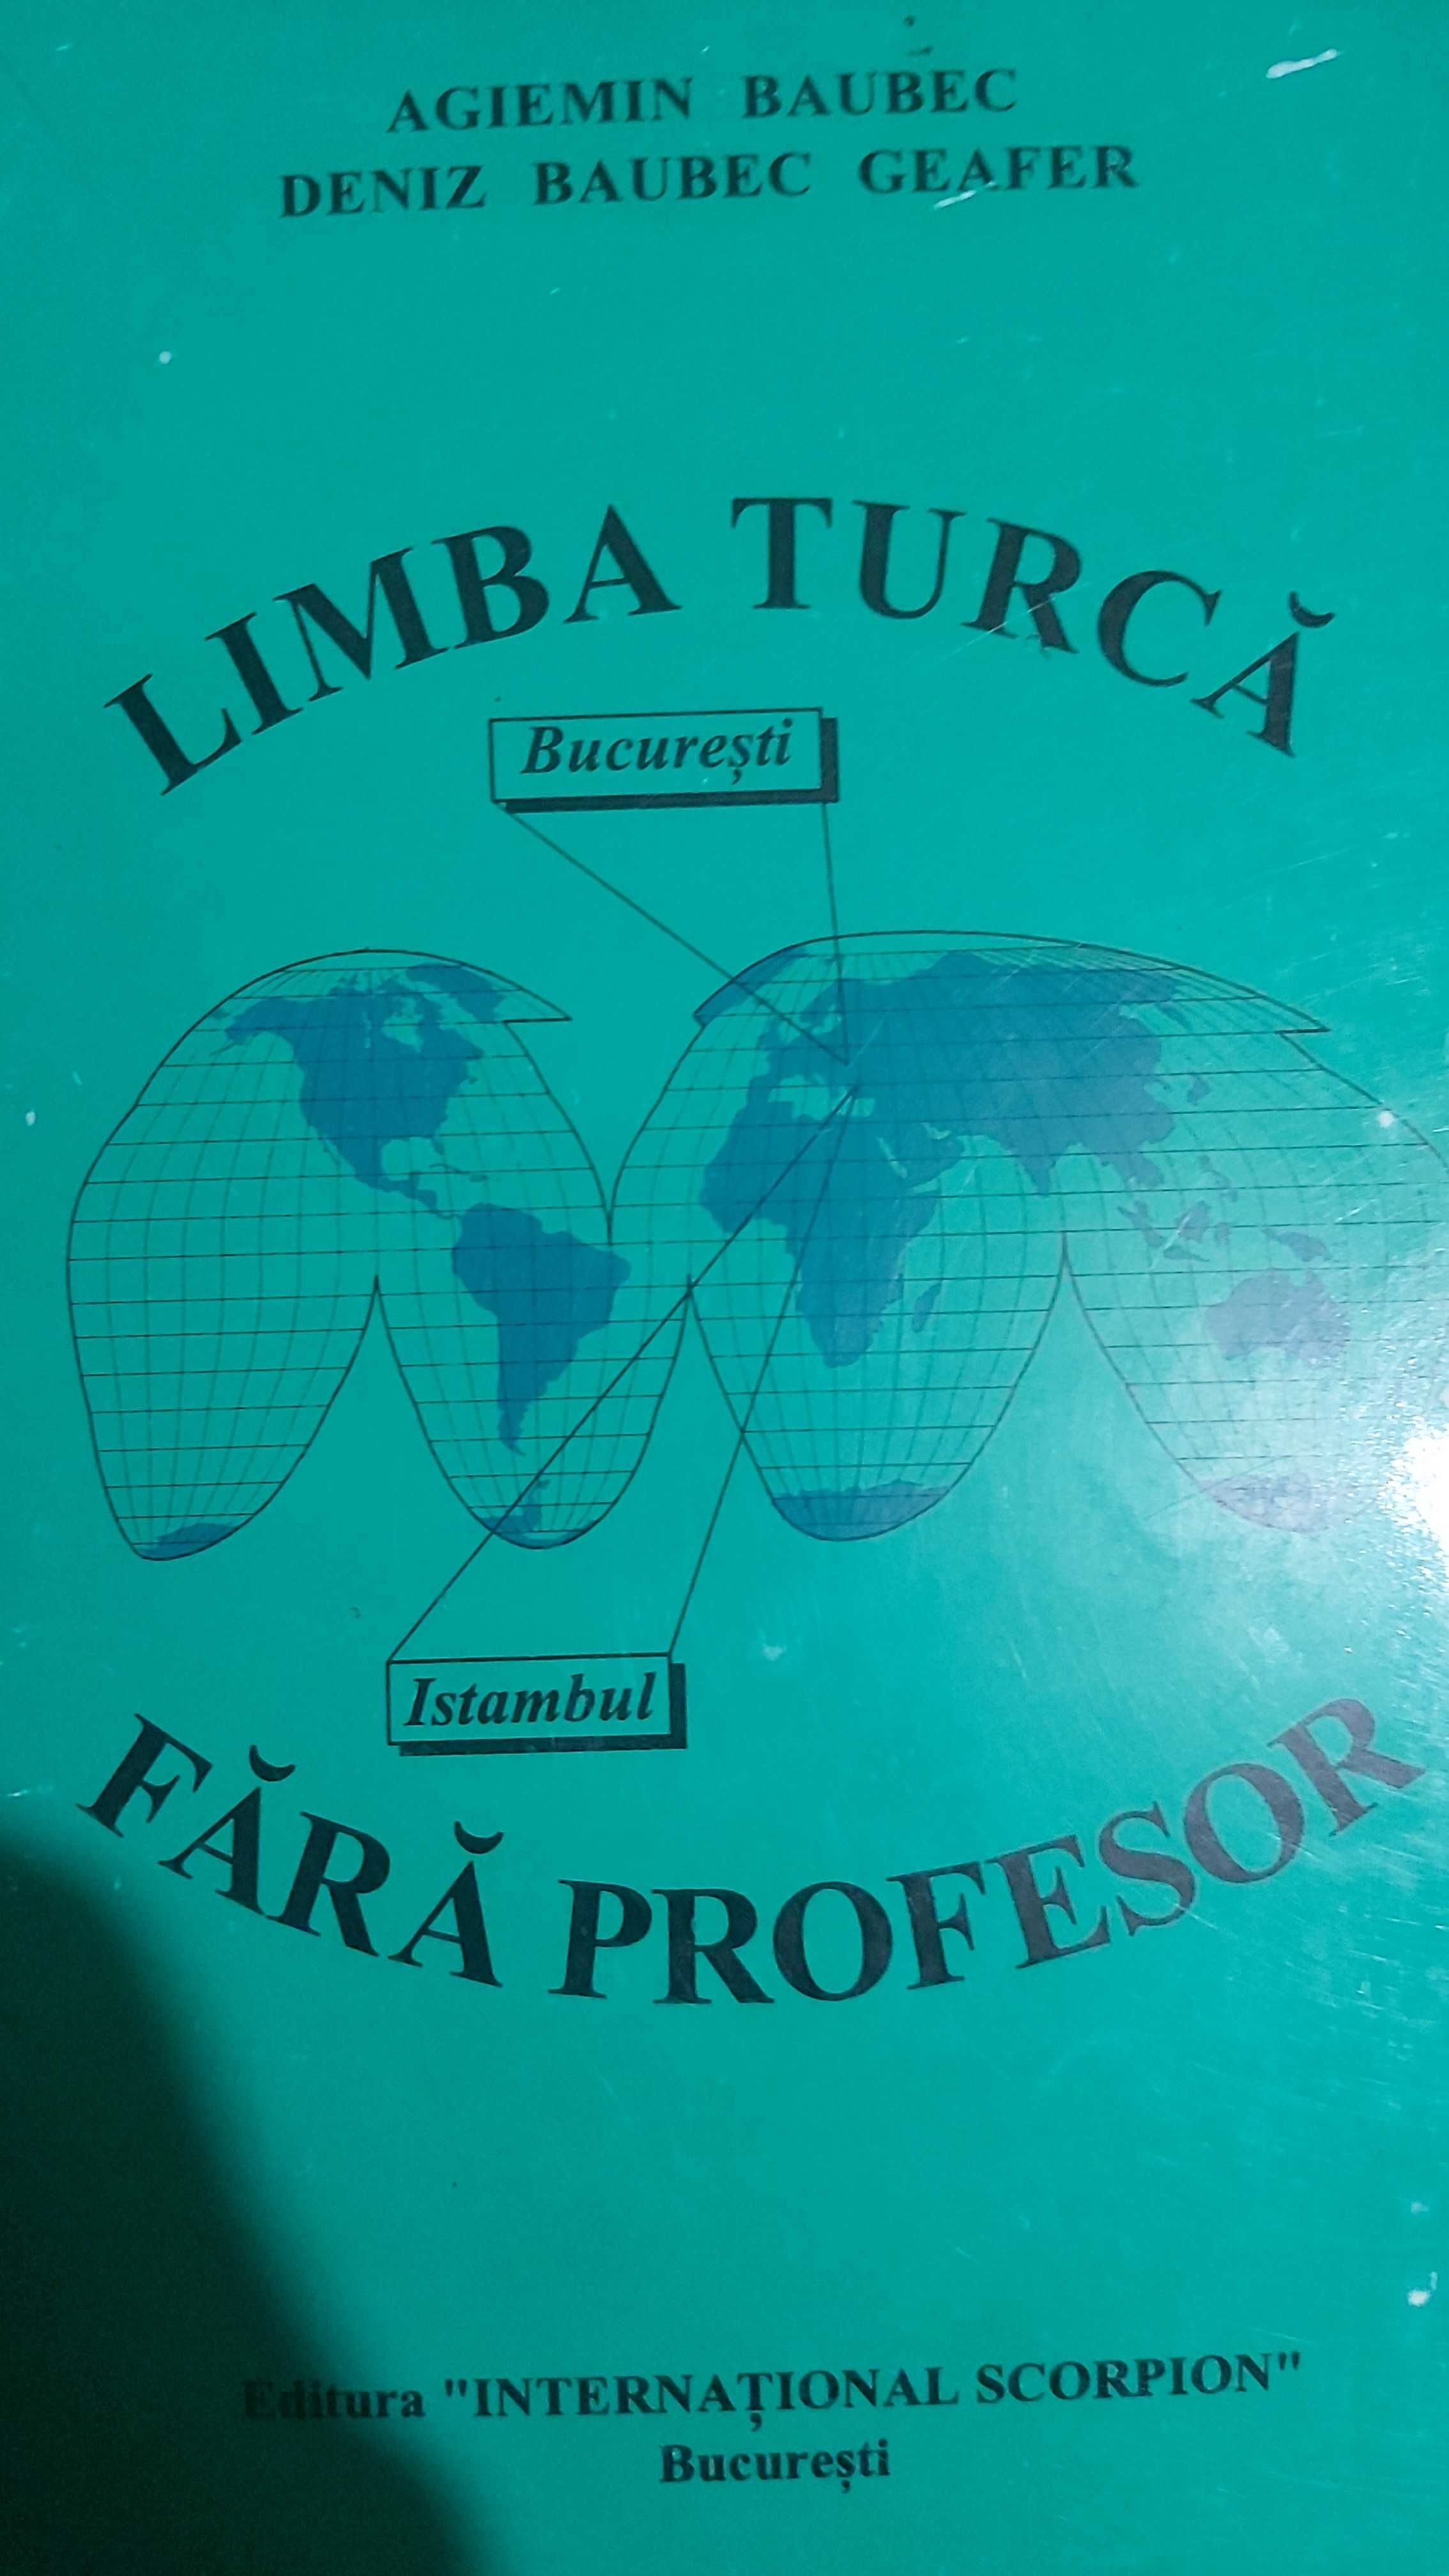 Limba turca fara profesor  Agiemin Baubec 1995